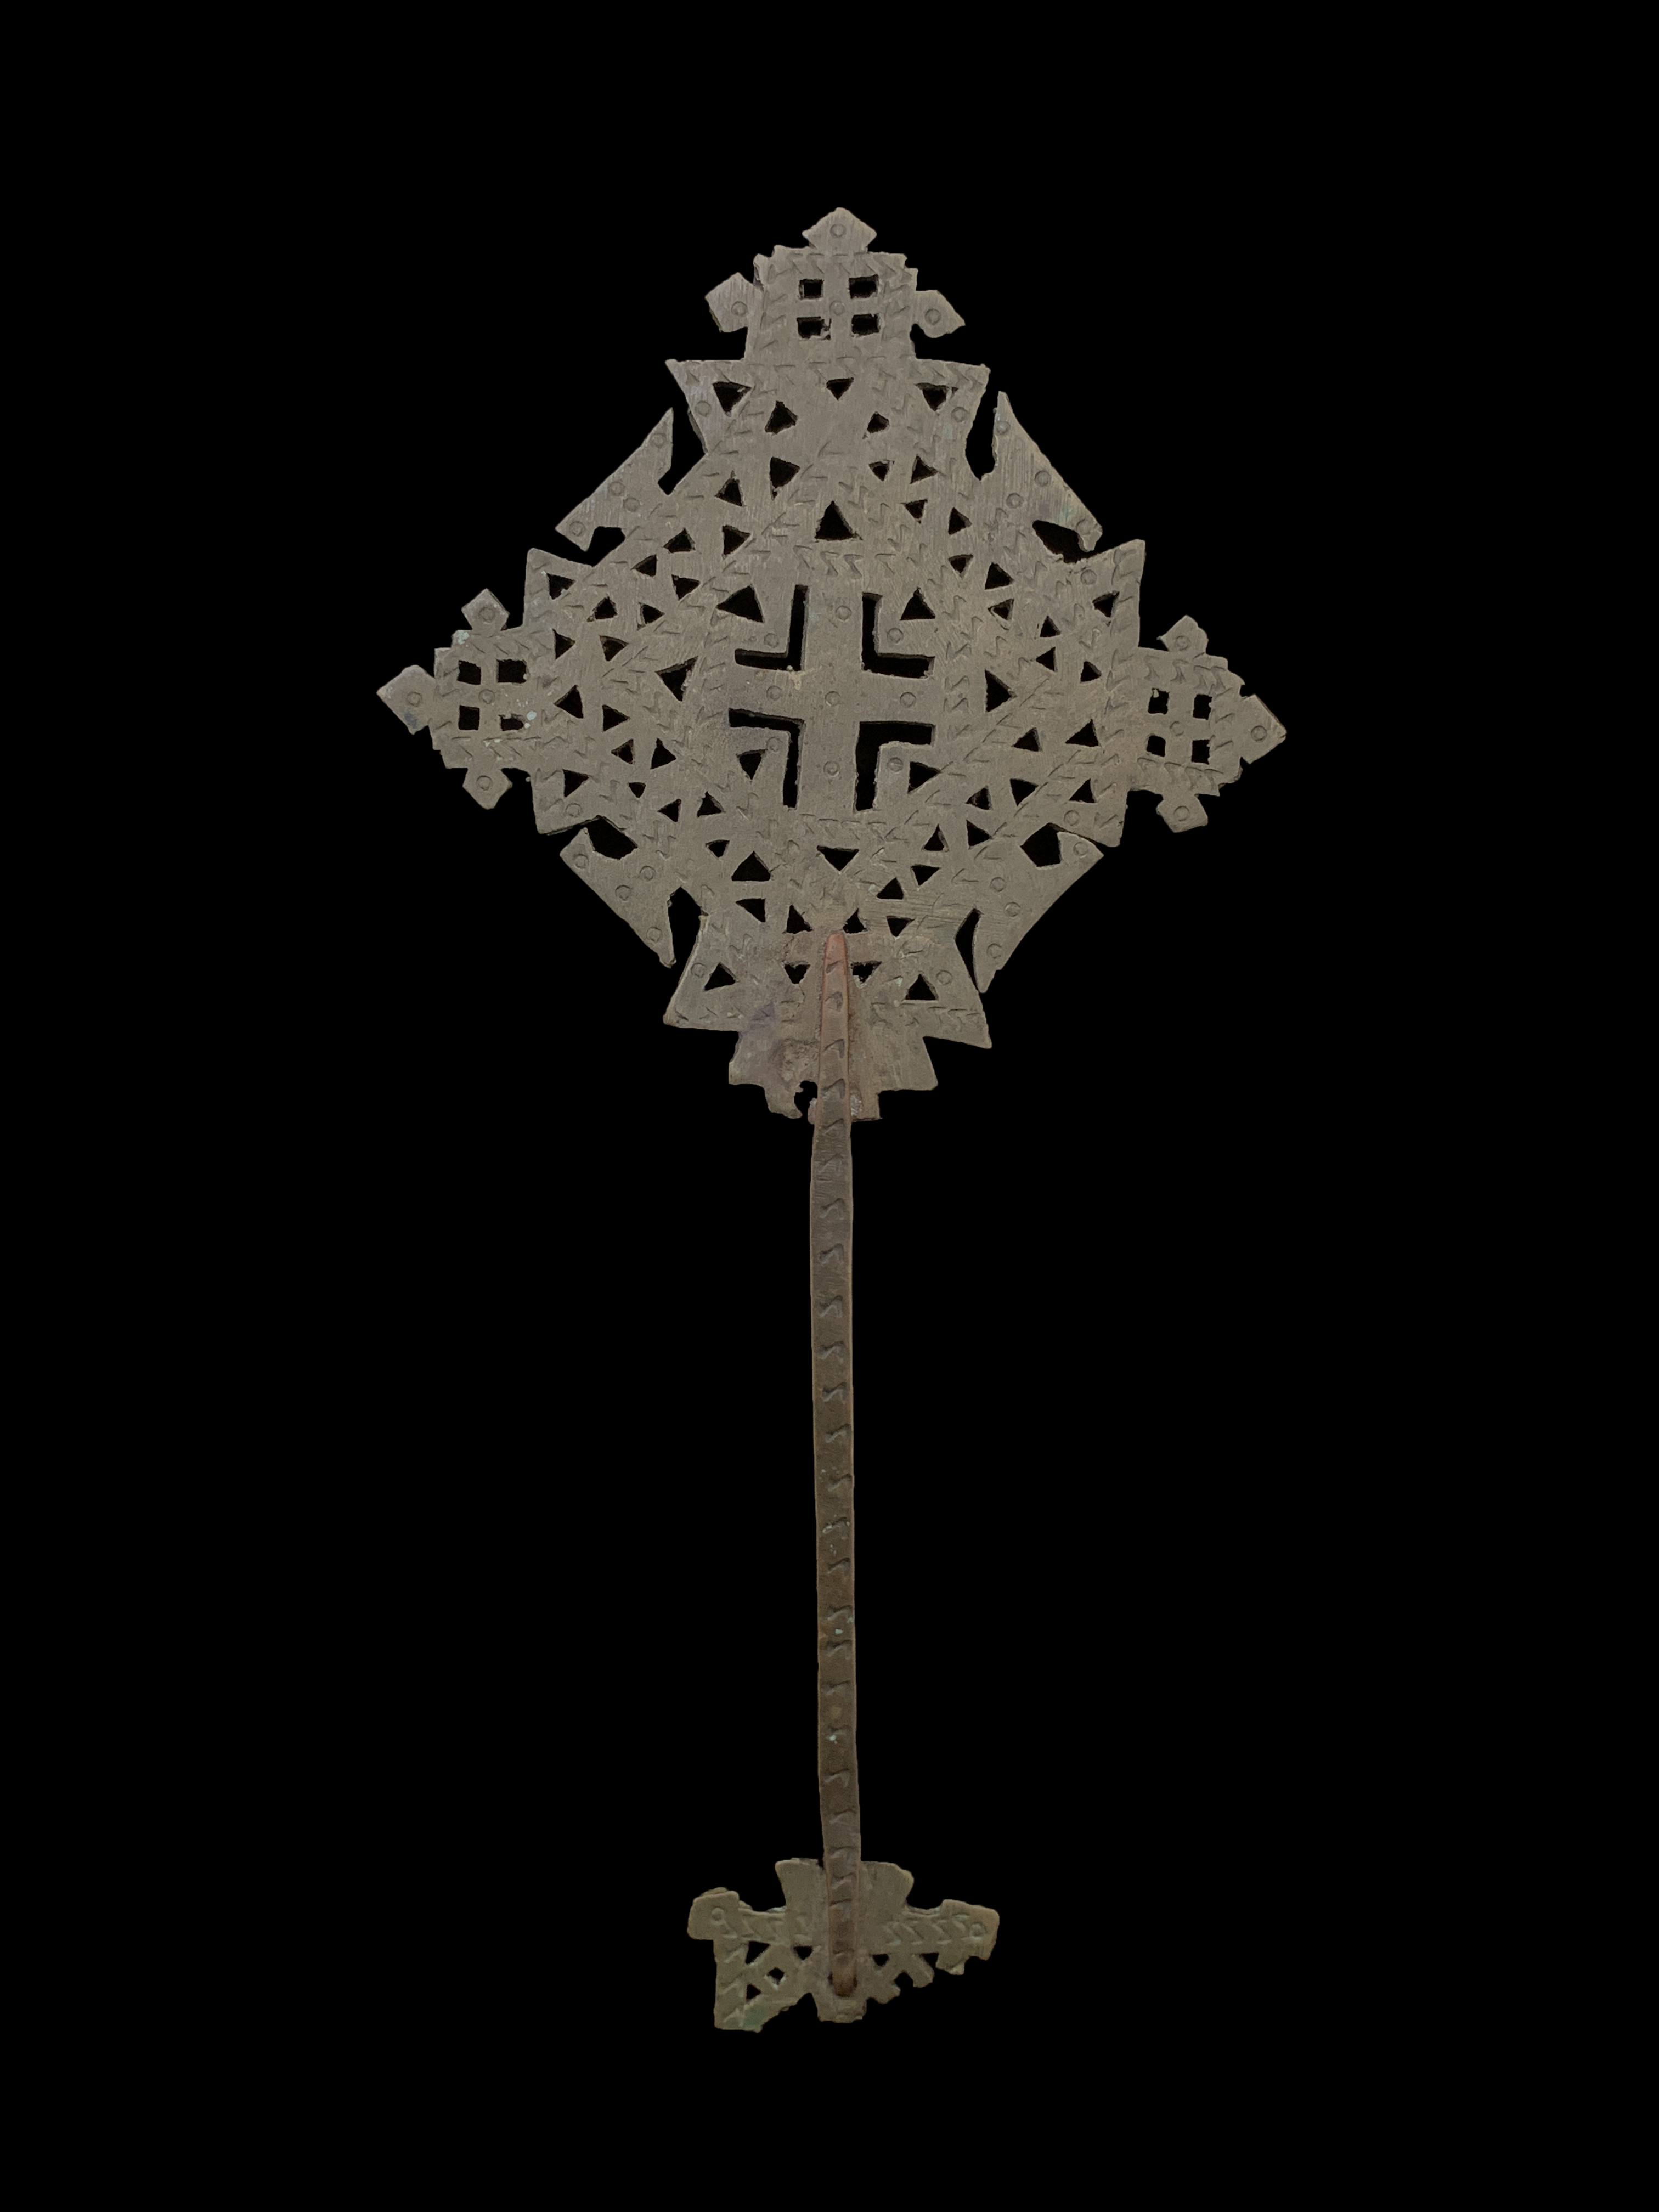 Coptic Handcross - Ethiopia - As is